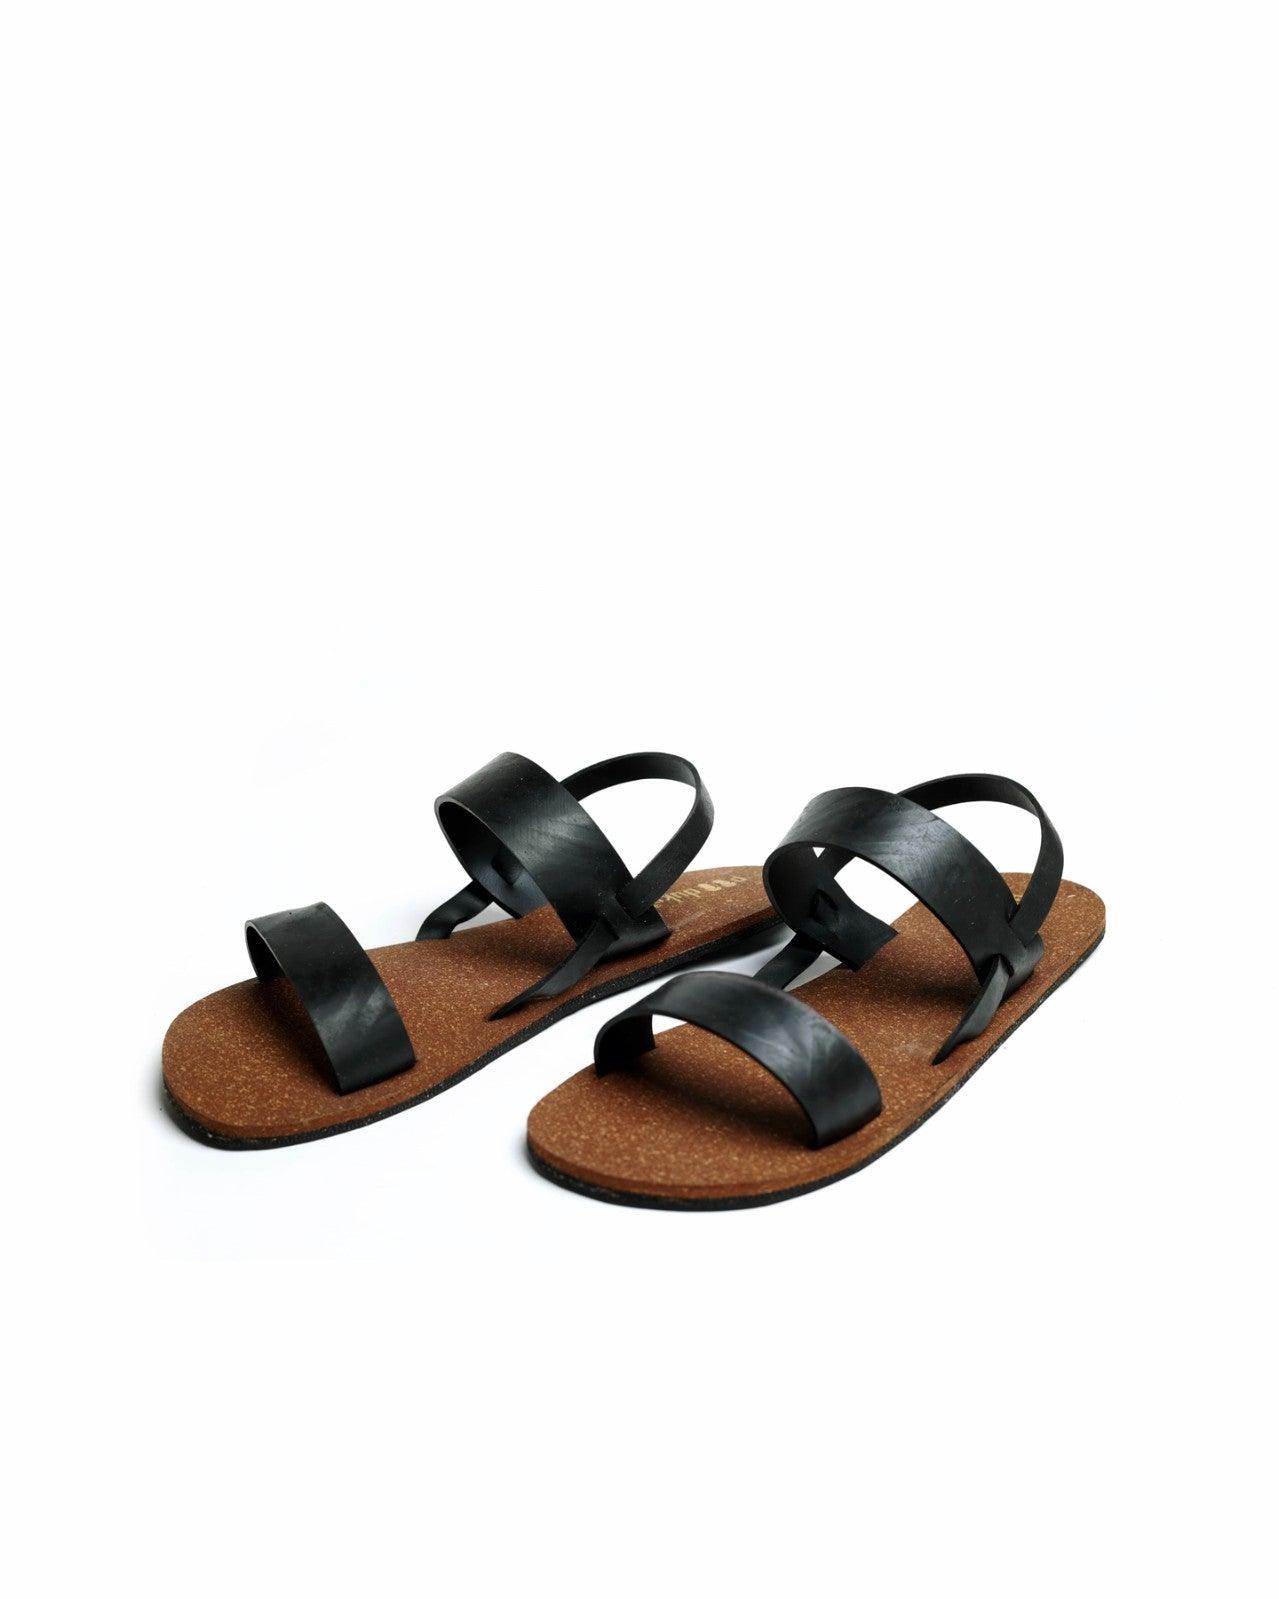 Sade Slingback Cork Flat Sandals for Women (Brown)